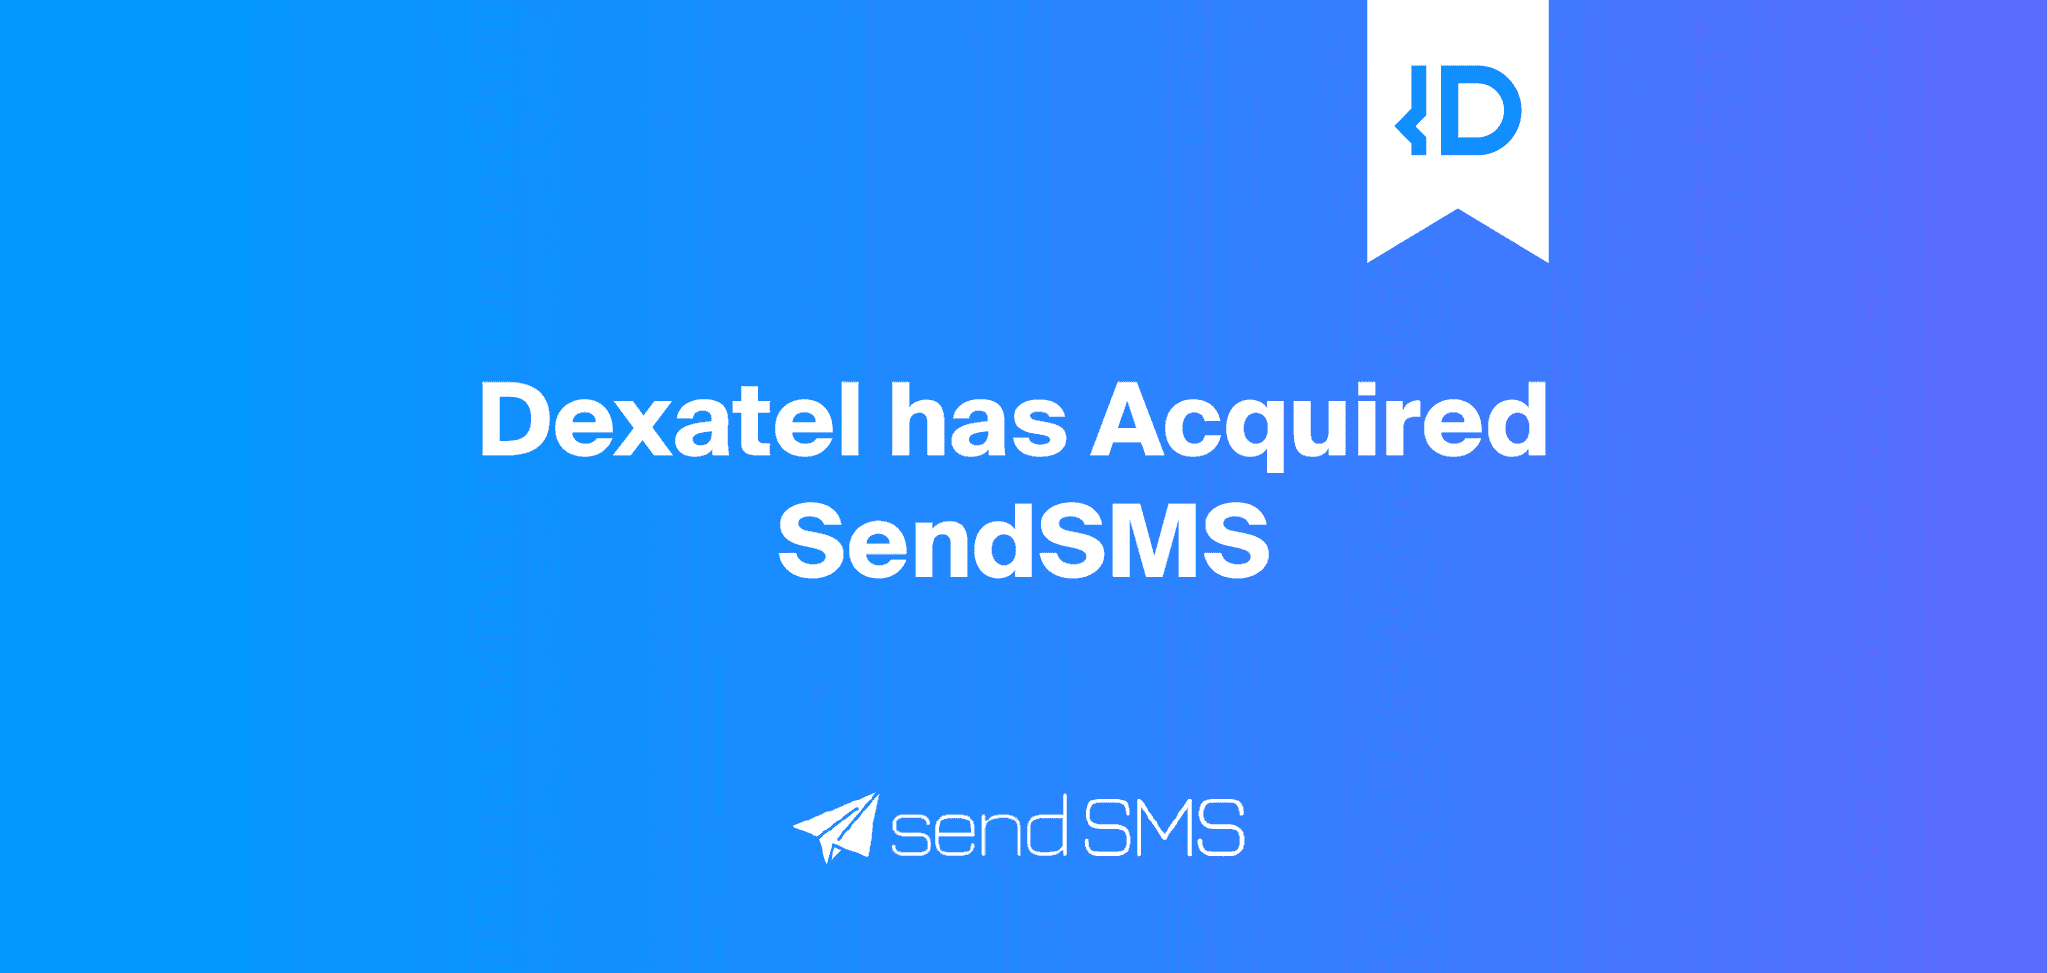 Dexatel has Acquired SendSMS